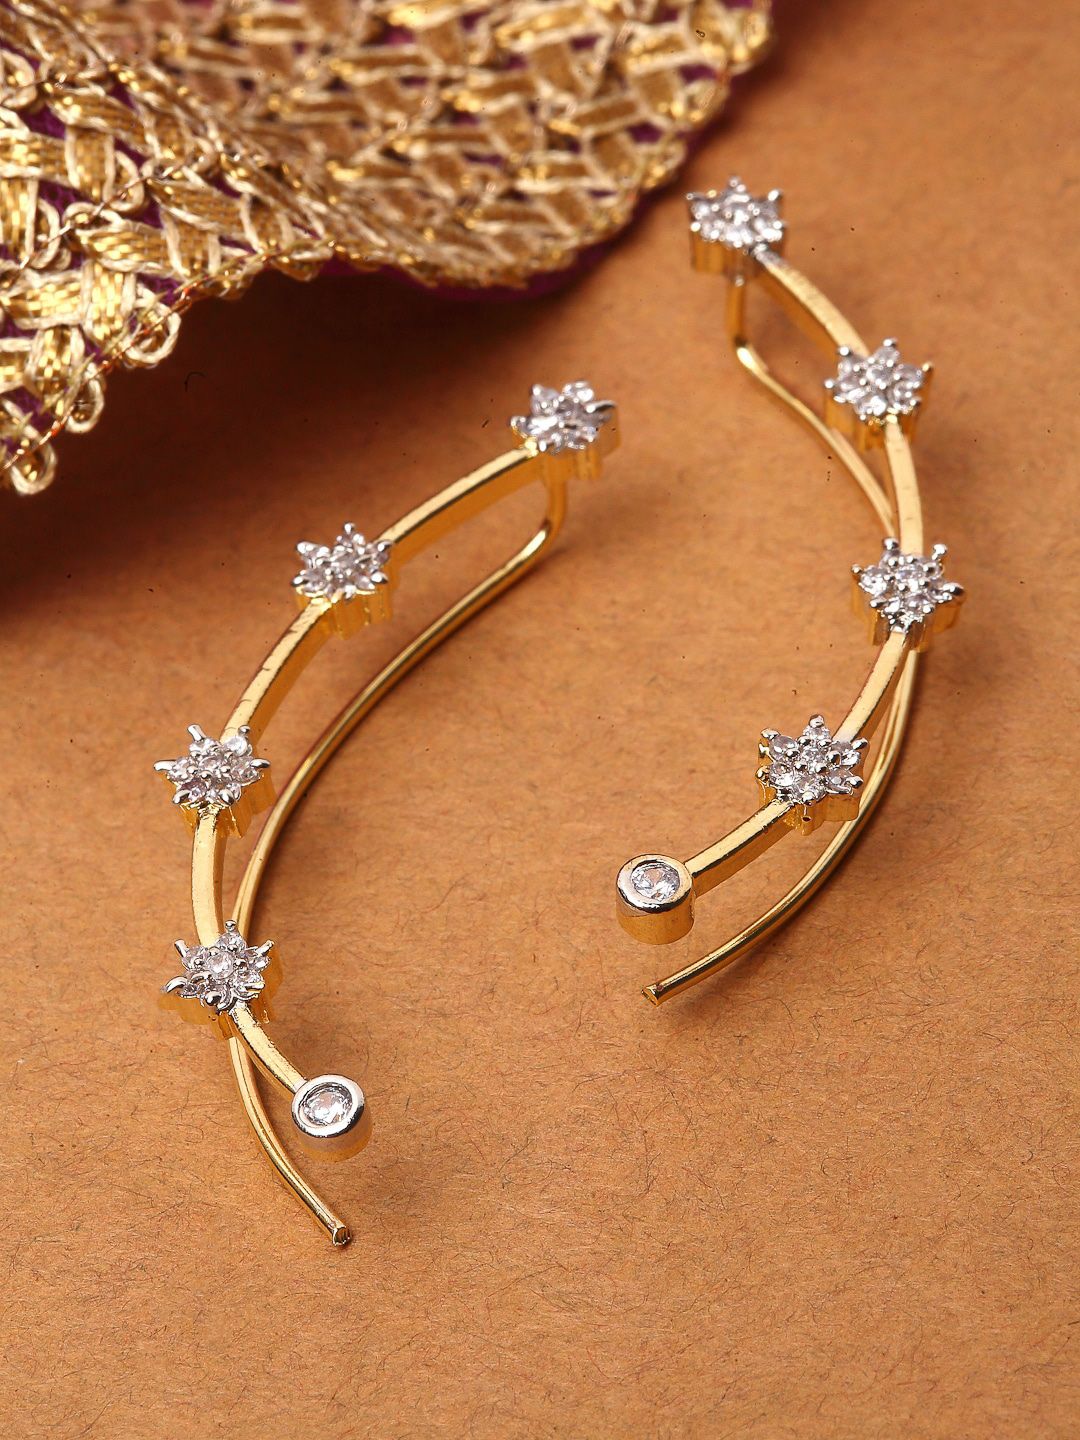 ZENEME White & Gold-Toned CZ Stone Ear Cuff Earrings Price in India